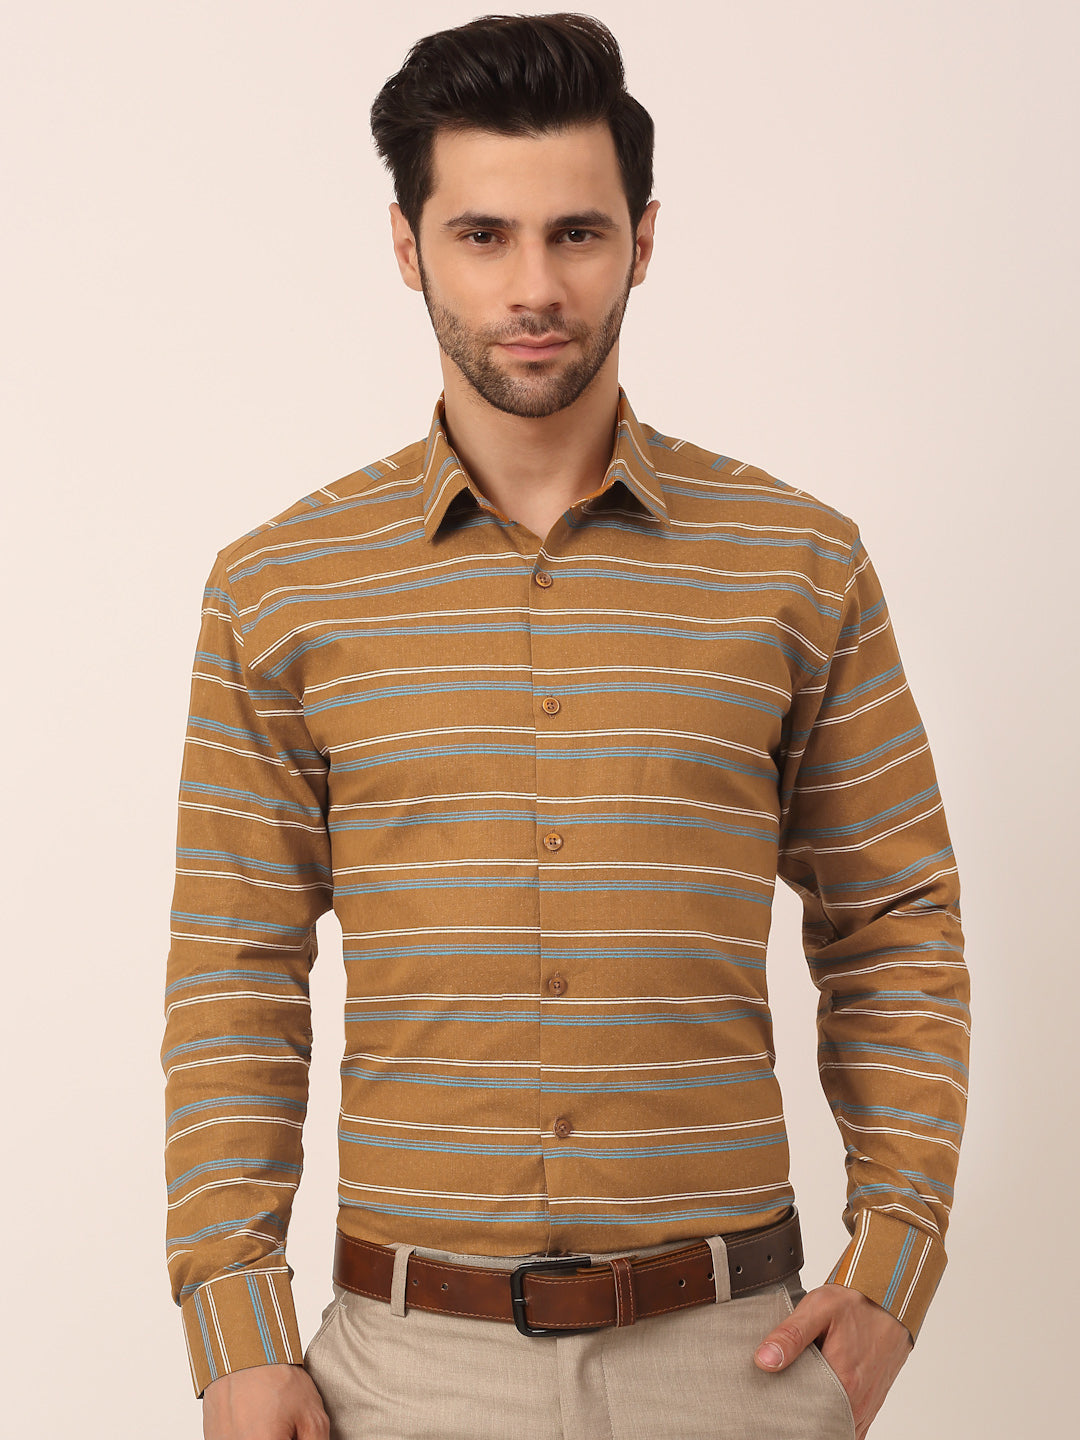 Men's  Cotton Striped Formal Shirts ( SF 820Mustard ) - Jainish